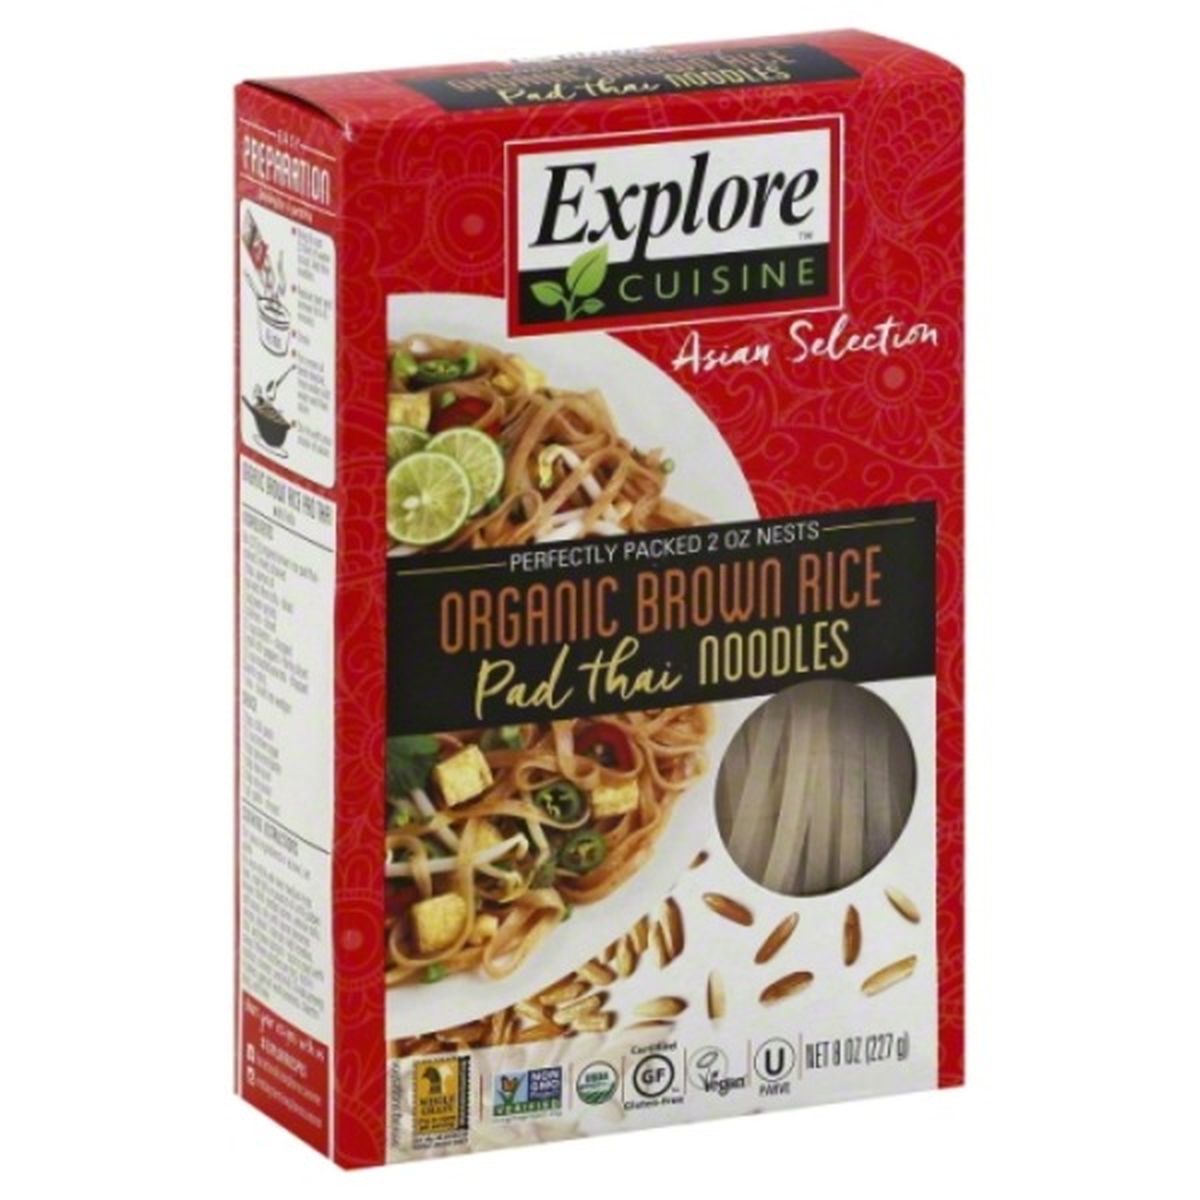 Calories in Explore Cuisine Asian Selection Noodles, Pad Thai, Organic, Brown Rice